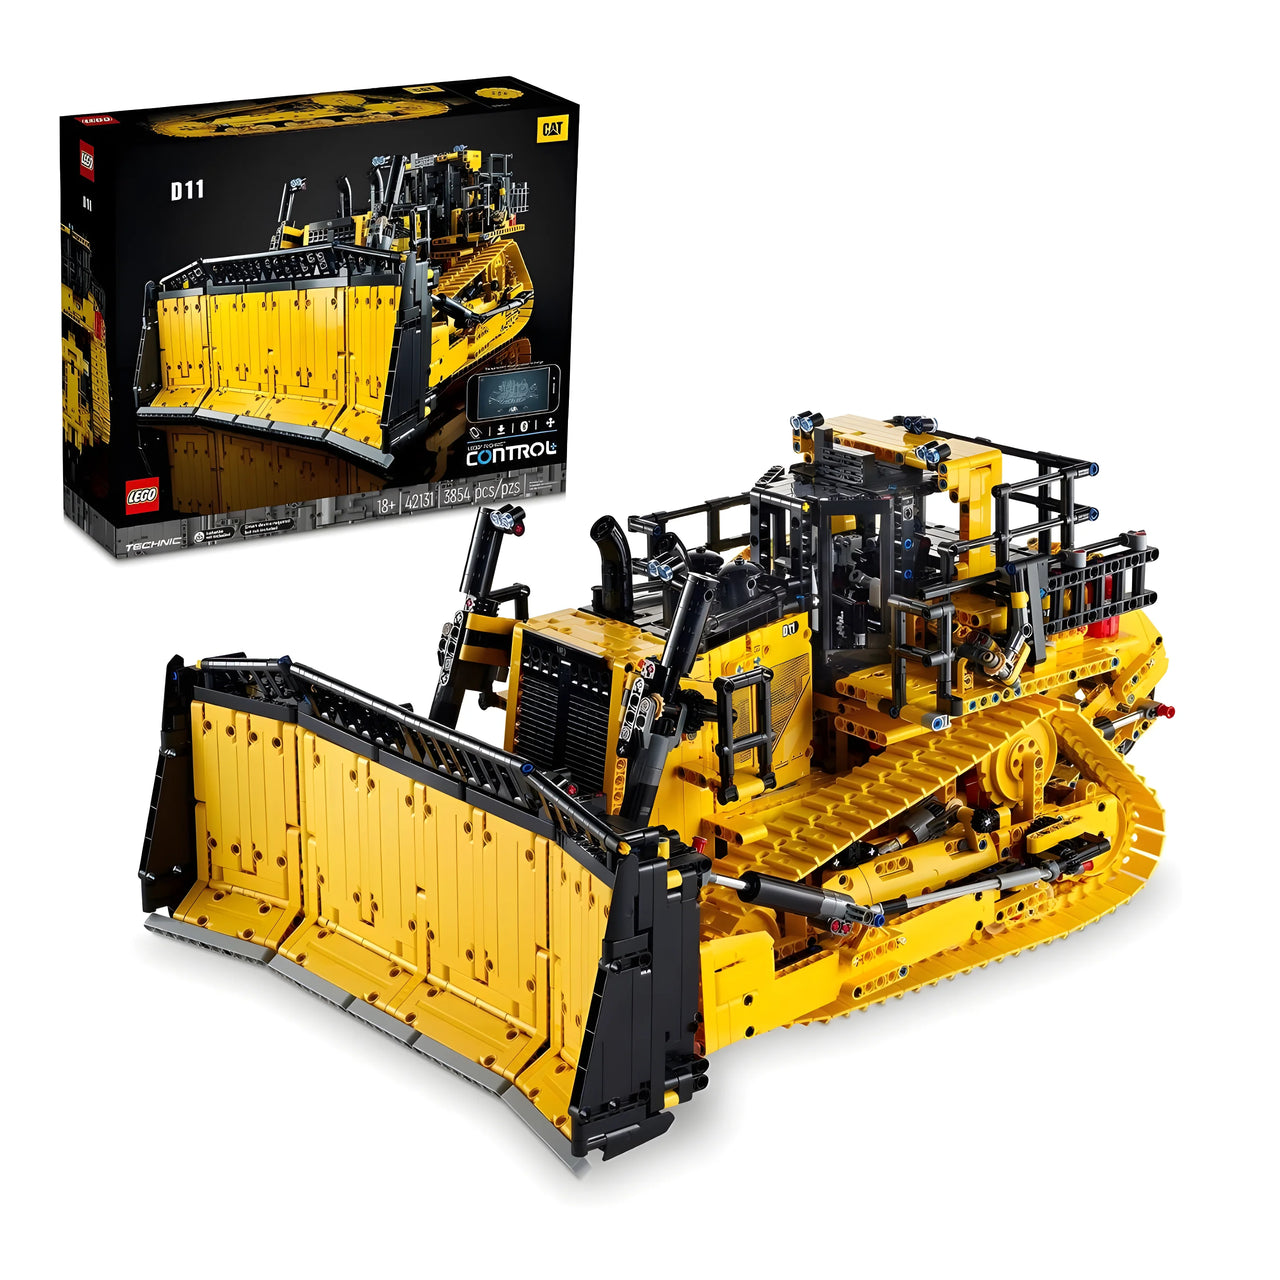 42131 LEGO Technic Tractor De Orugas Caterpillar D11 (Control Remoto) (3854 piezas)